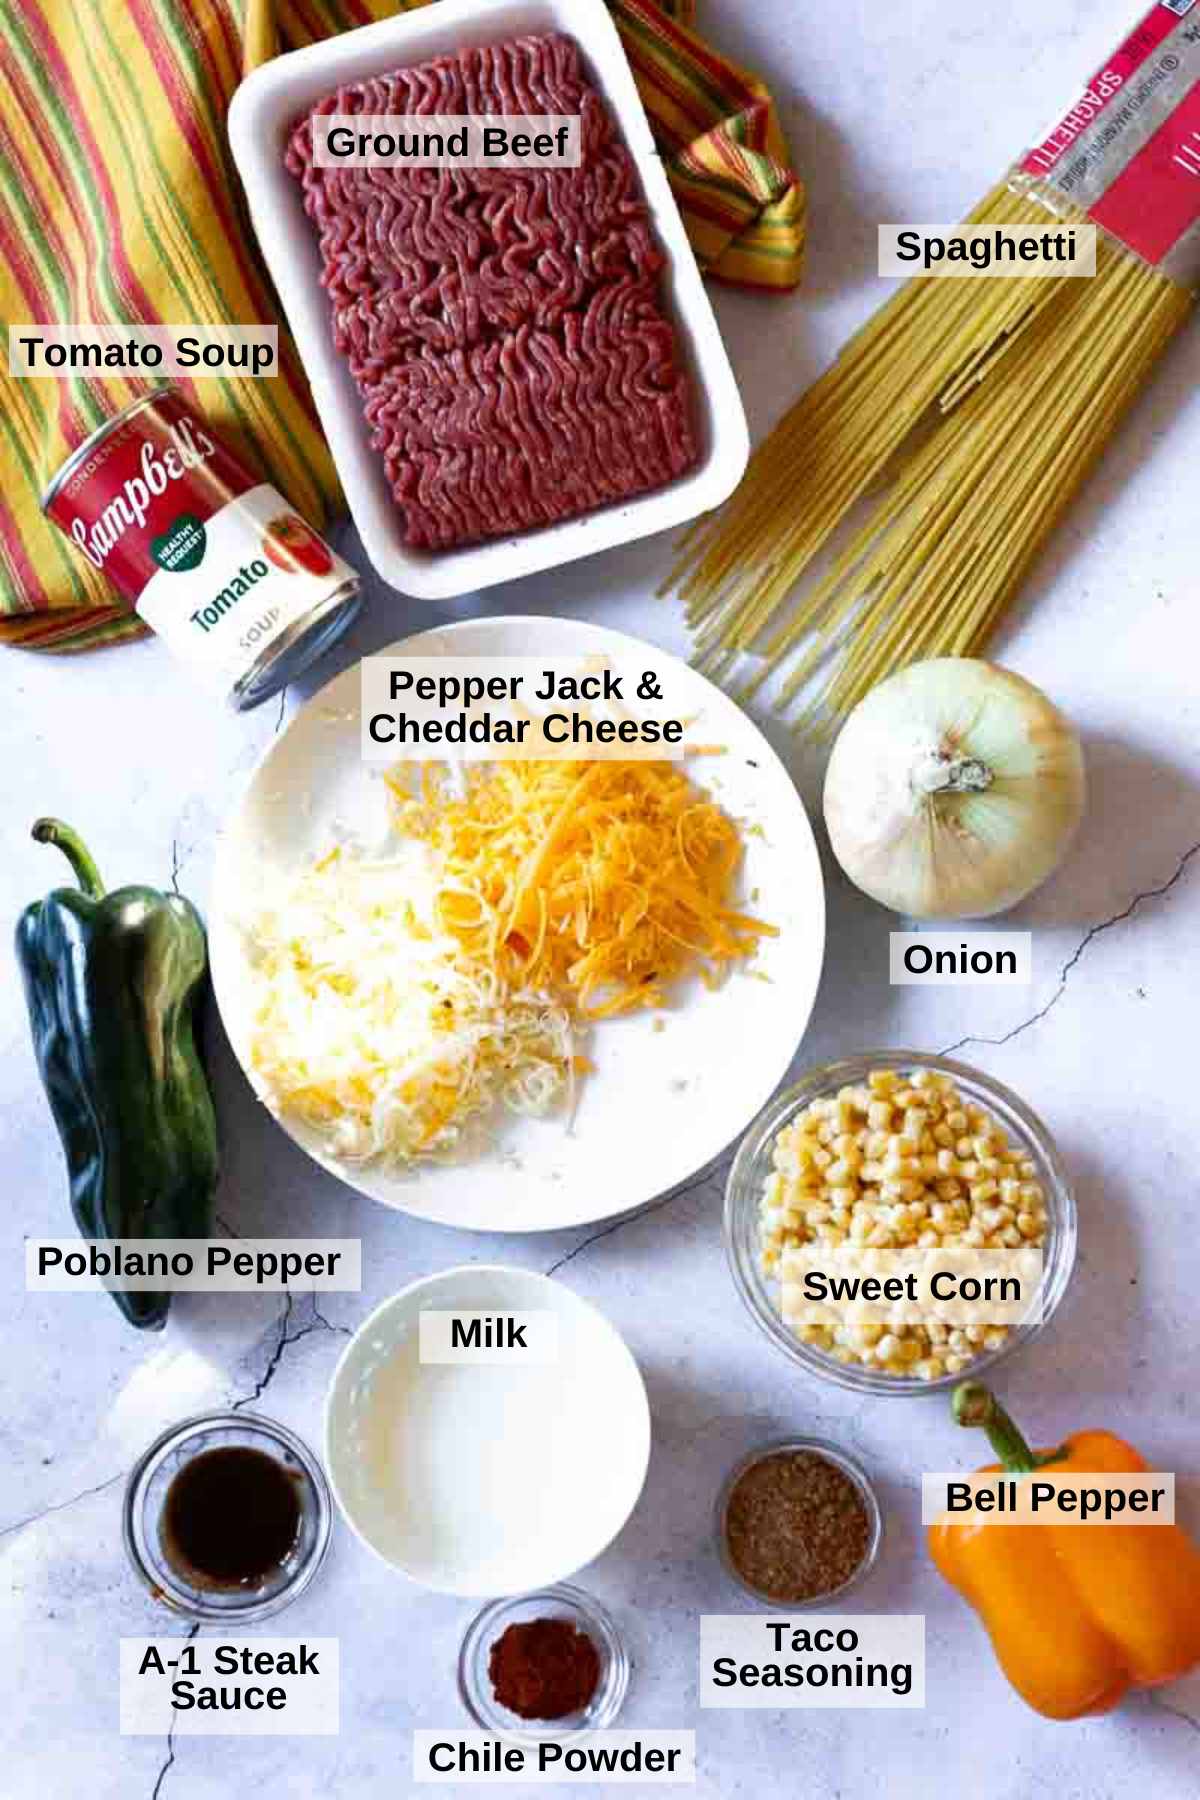 Ingredients to make cowboy spaghetti.